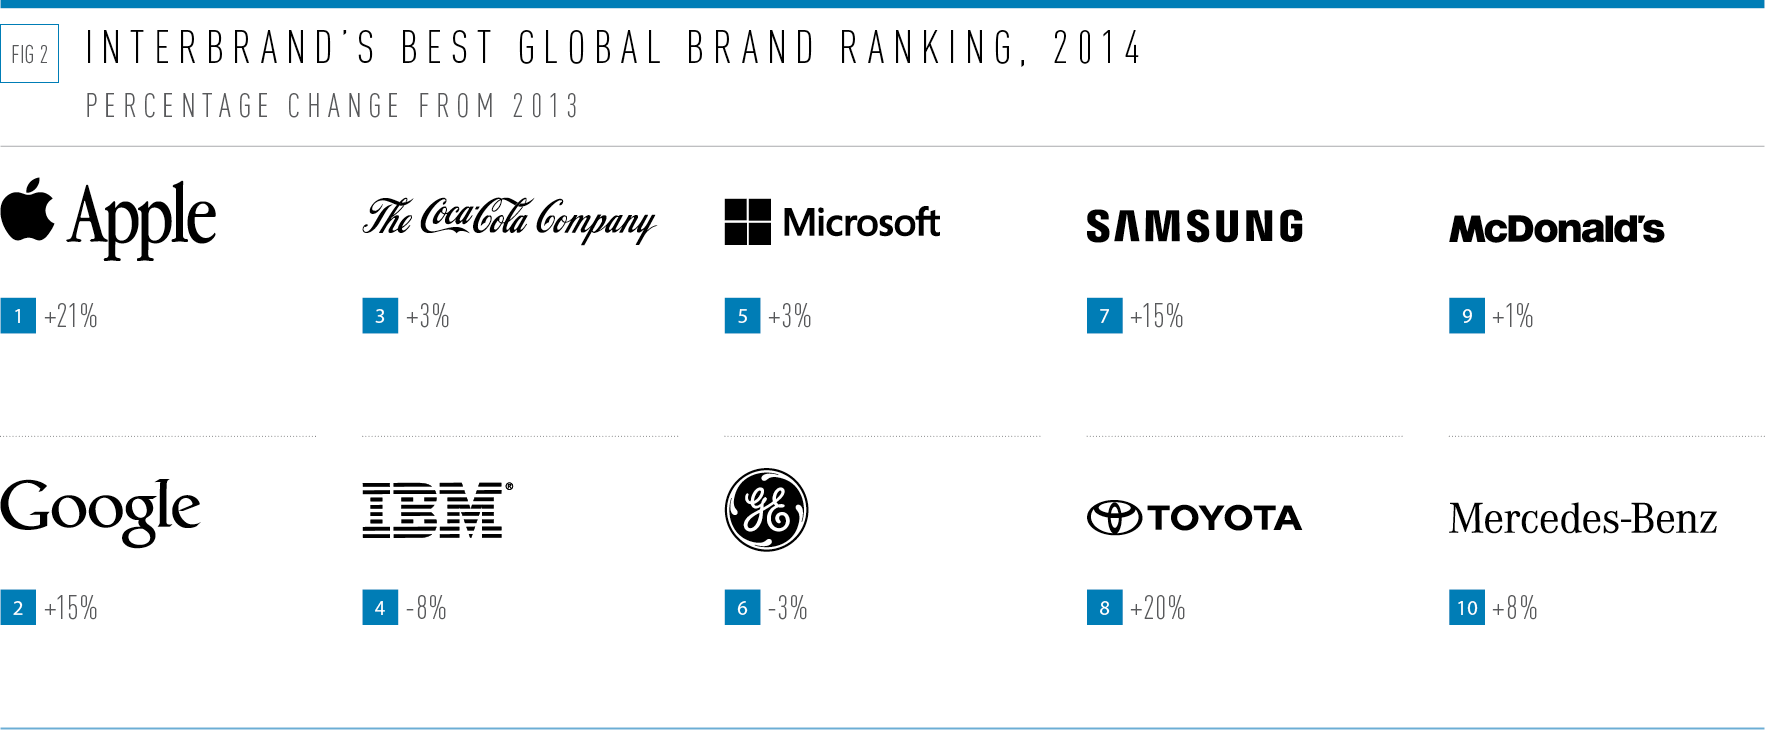 Interbrand's best global brand ranking 2014